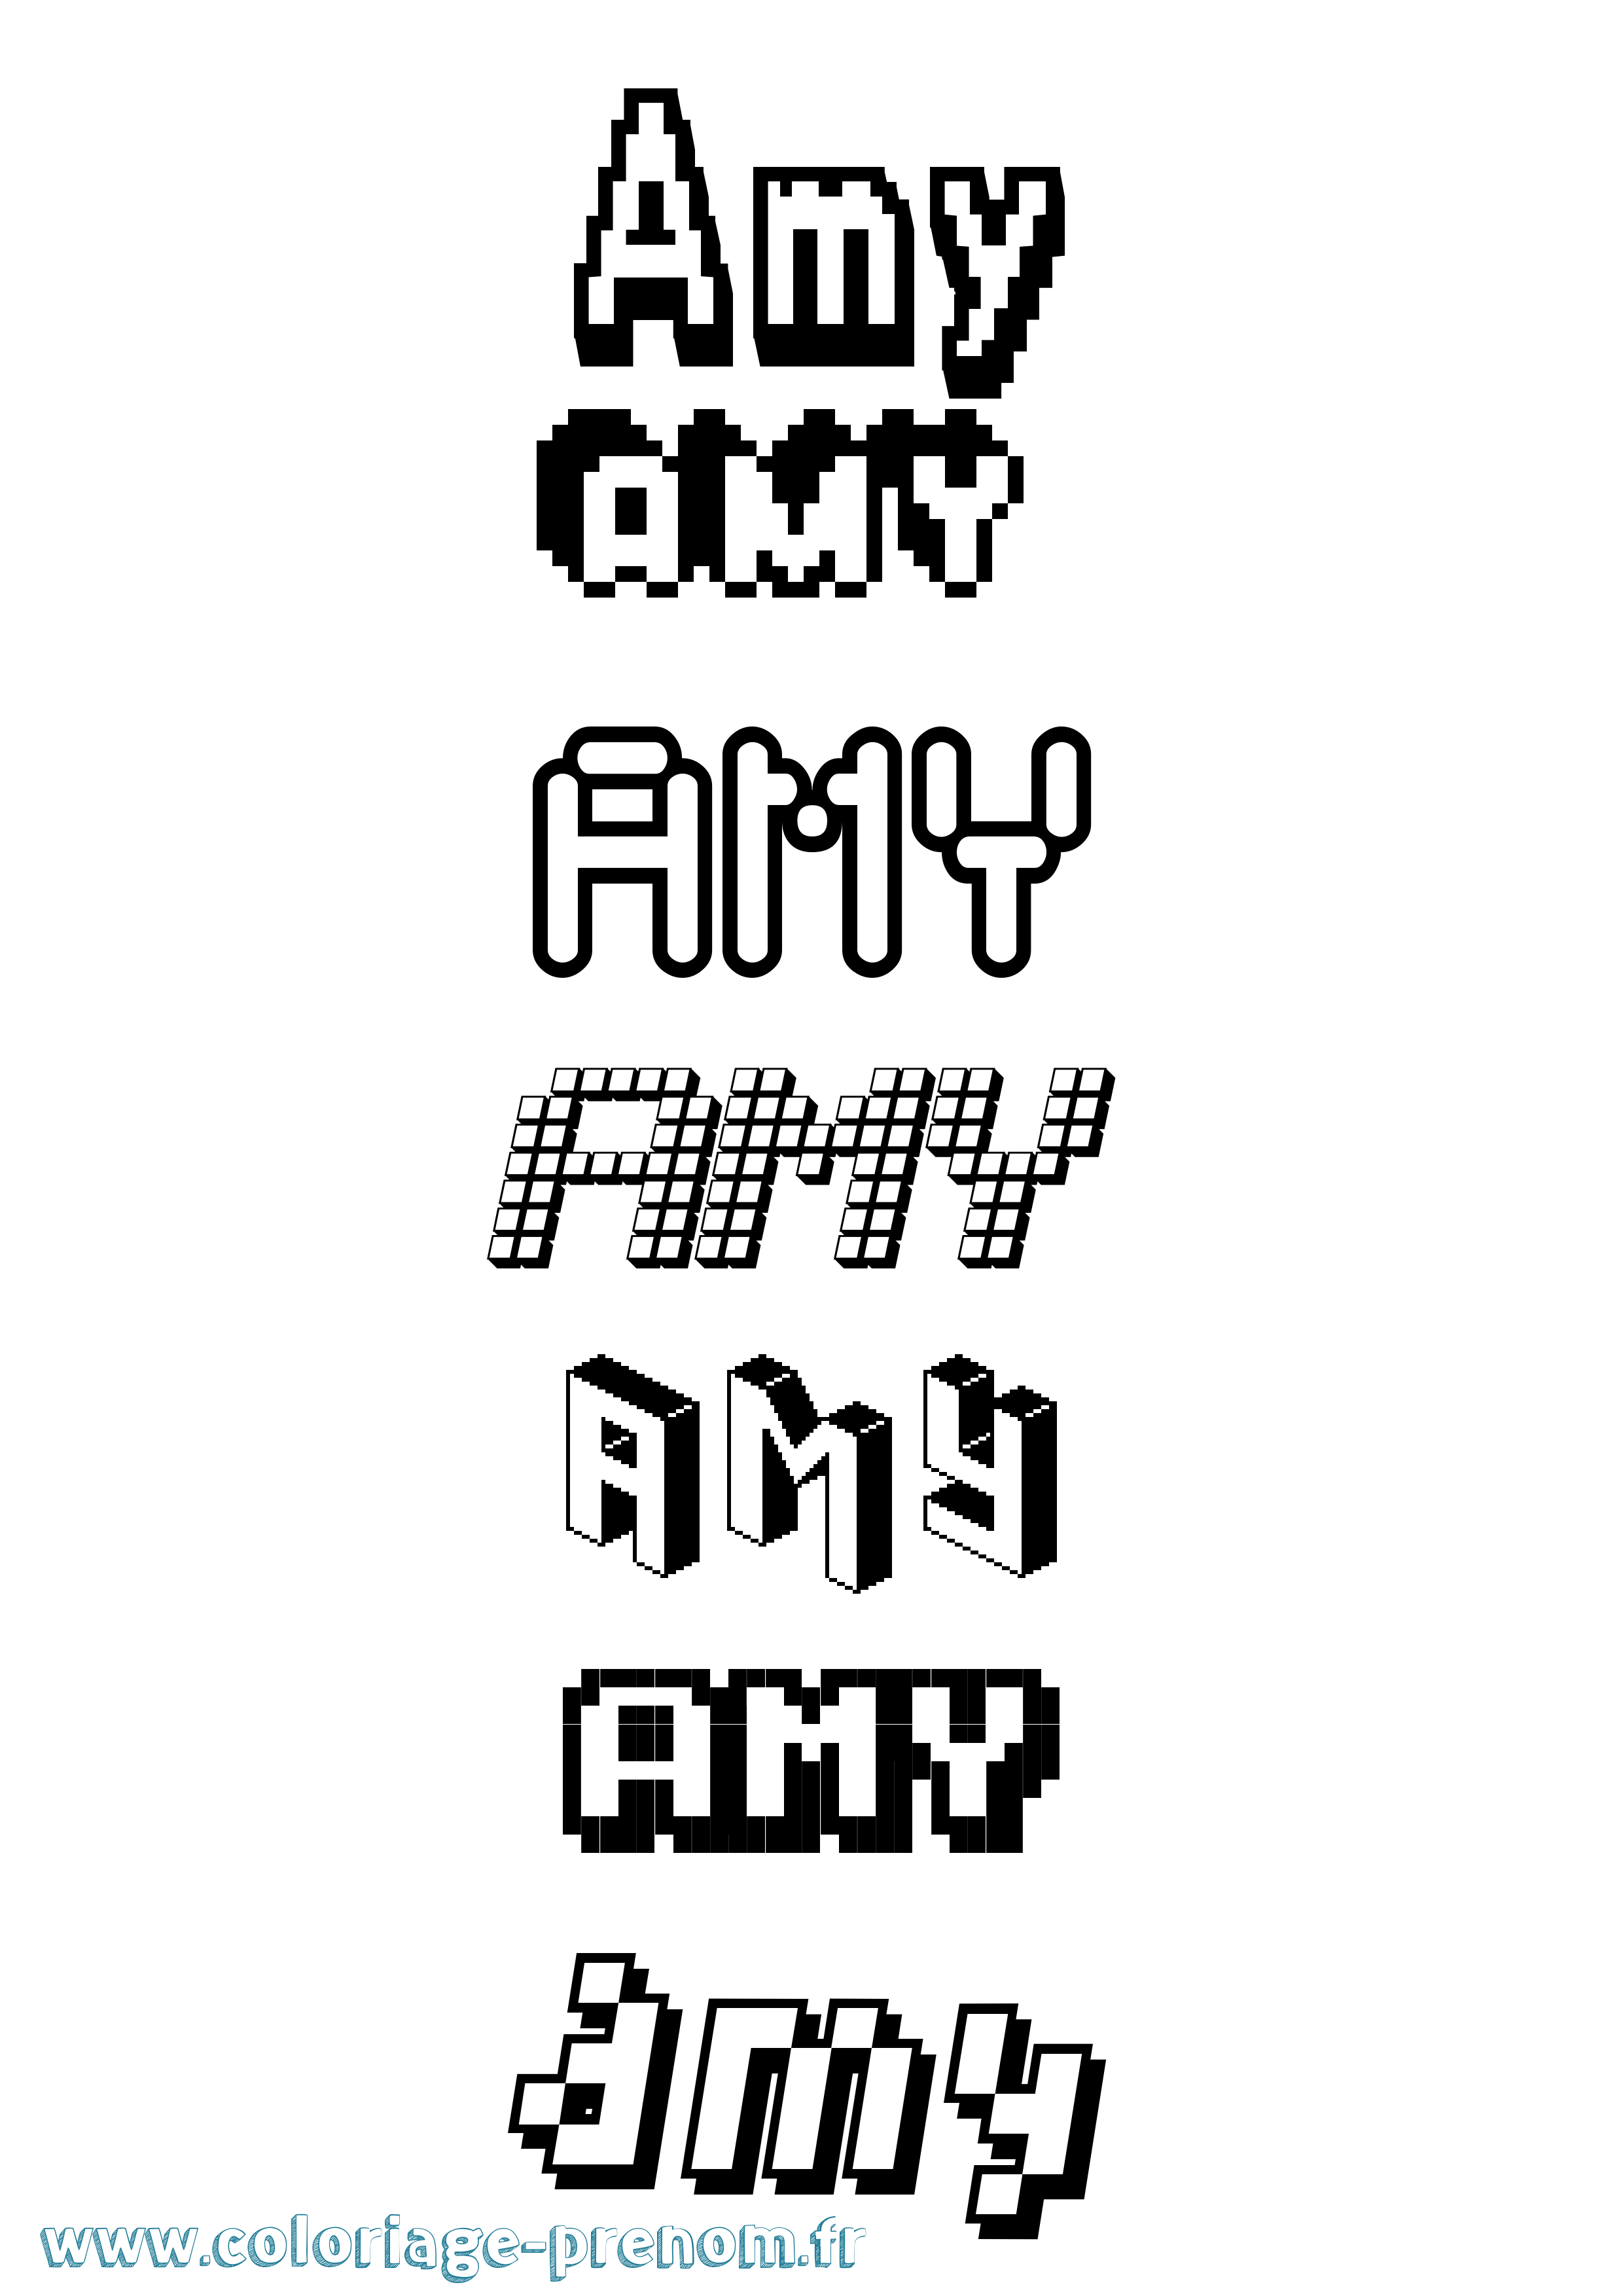 Coloriage prénom Amy Pixel